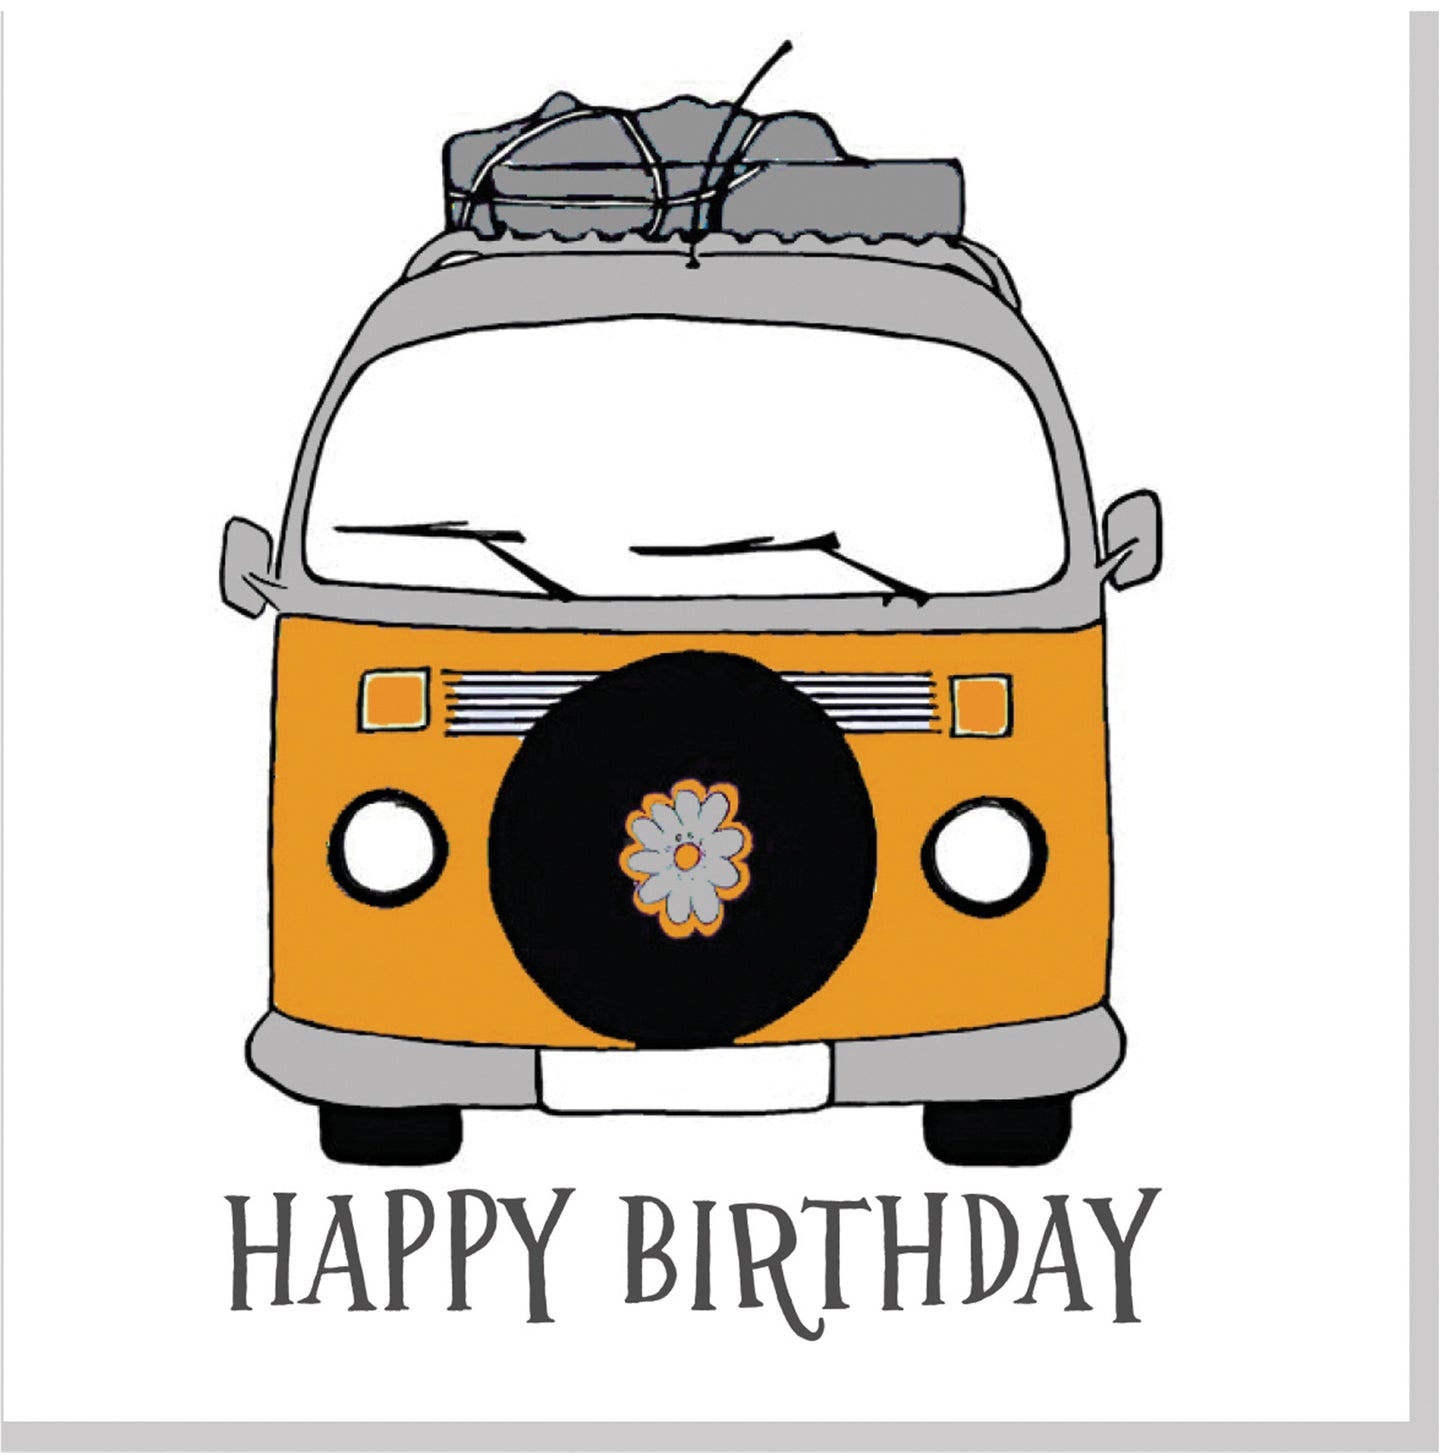 Camper van happy birthday square card